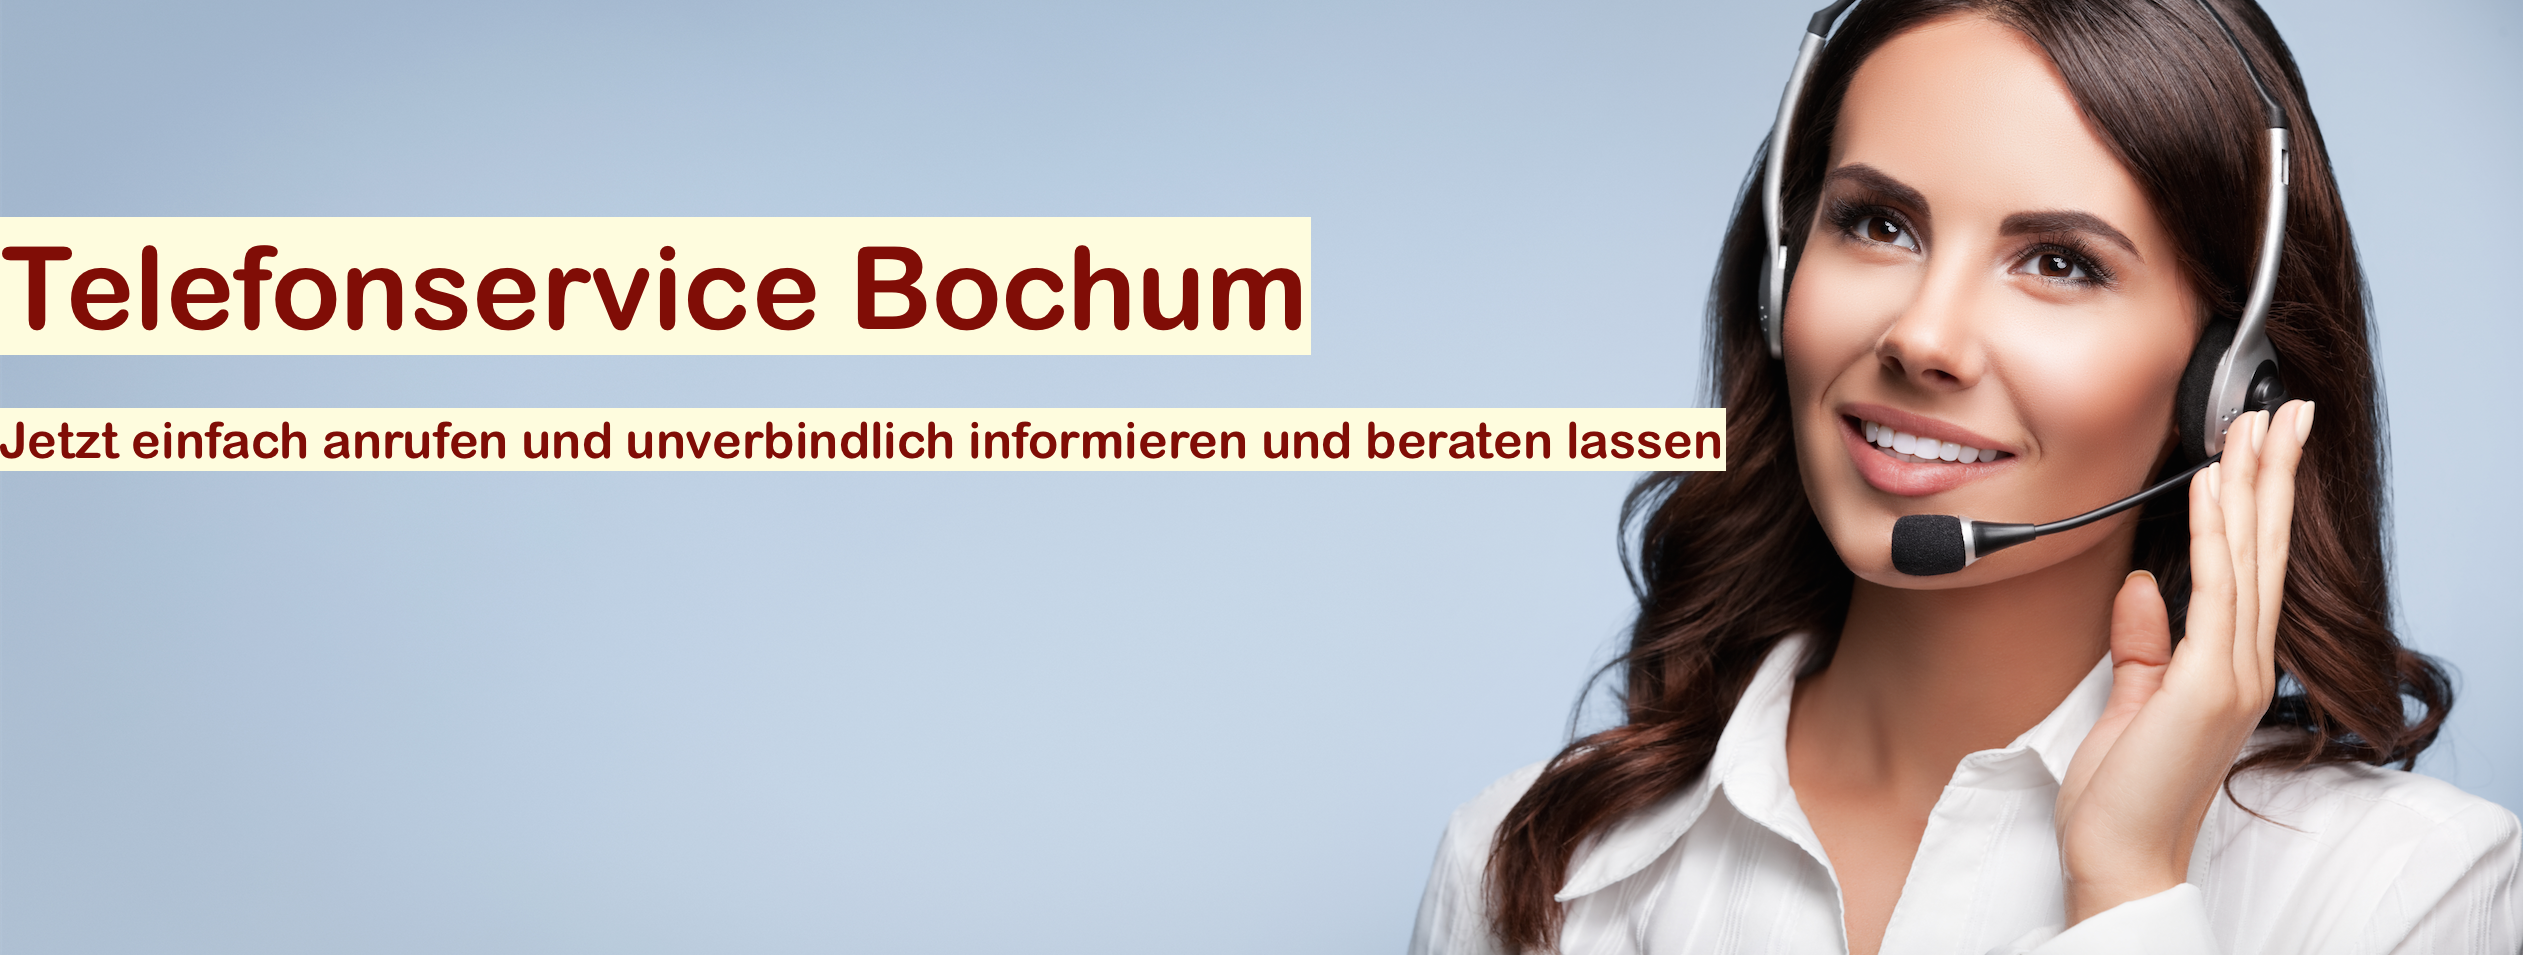 Telefonservice Bochum